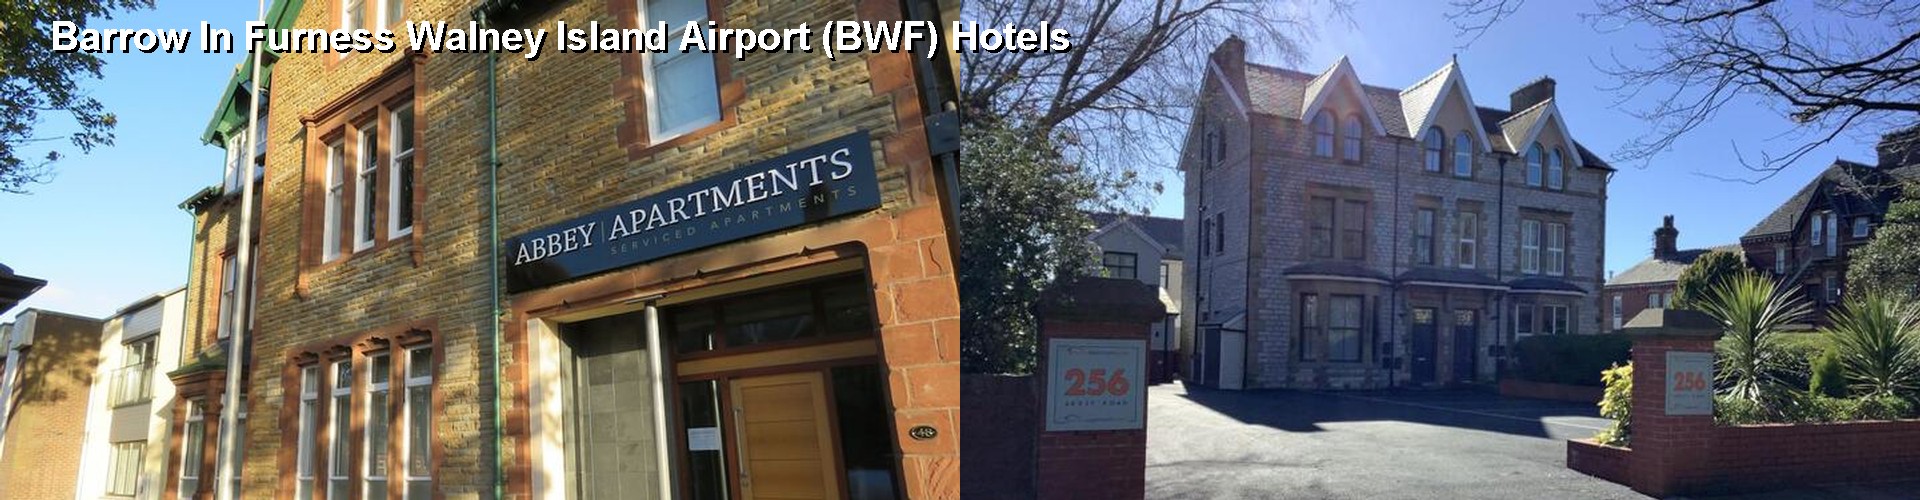 5 Best Hotels near Barrow In Furness Walney Island Airport (BWF)